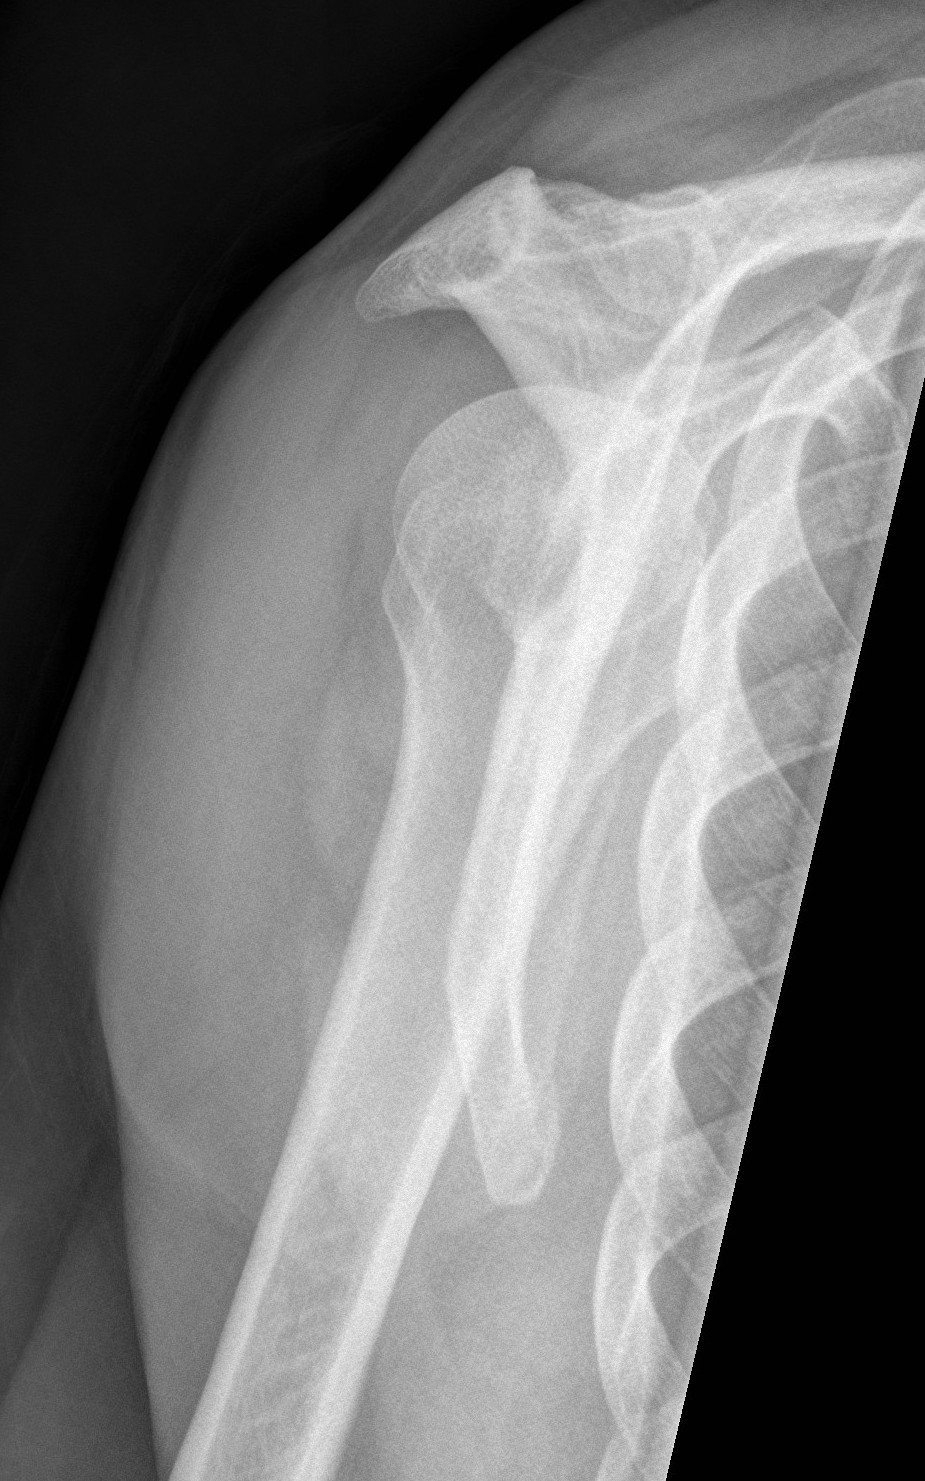 Shoulder Xrays | The Bone School